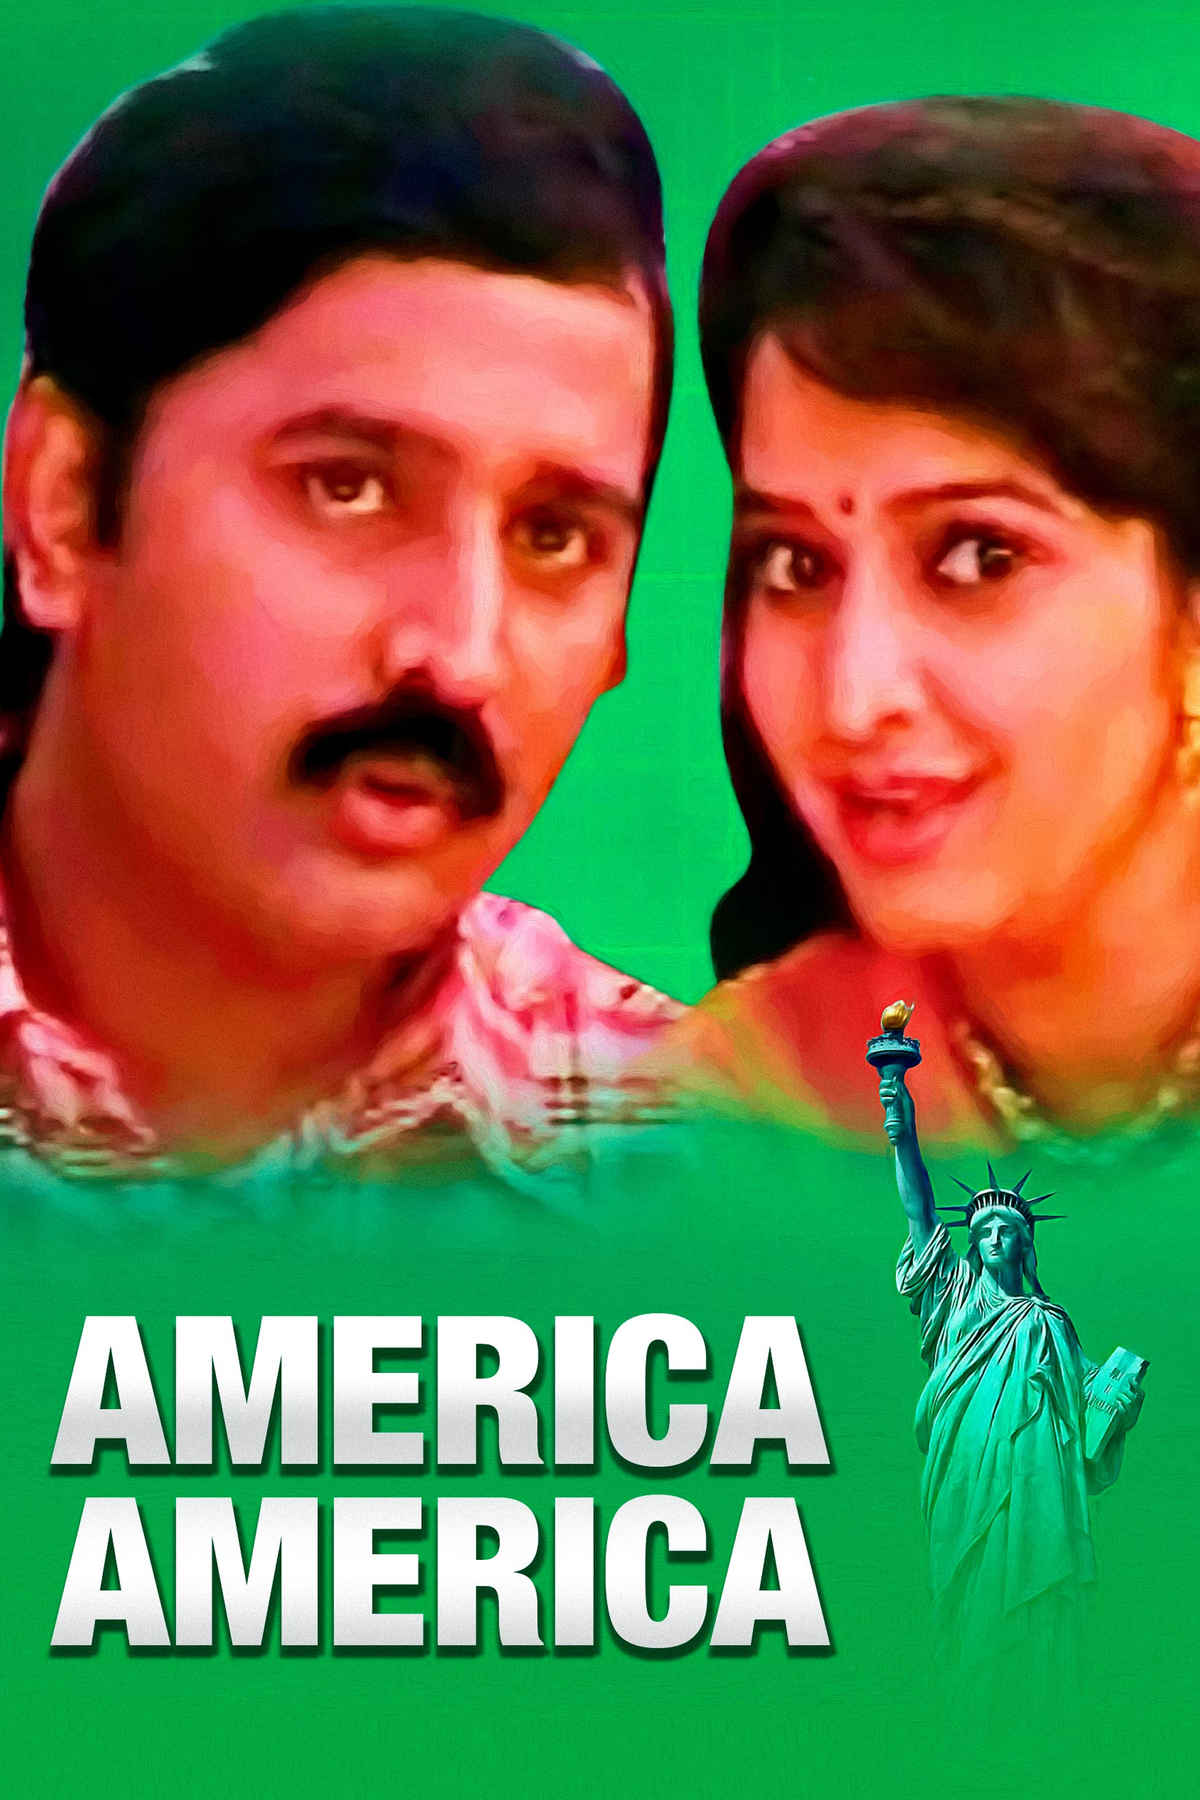 America America - Kannada